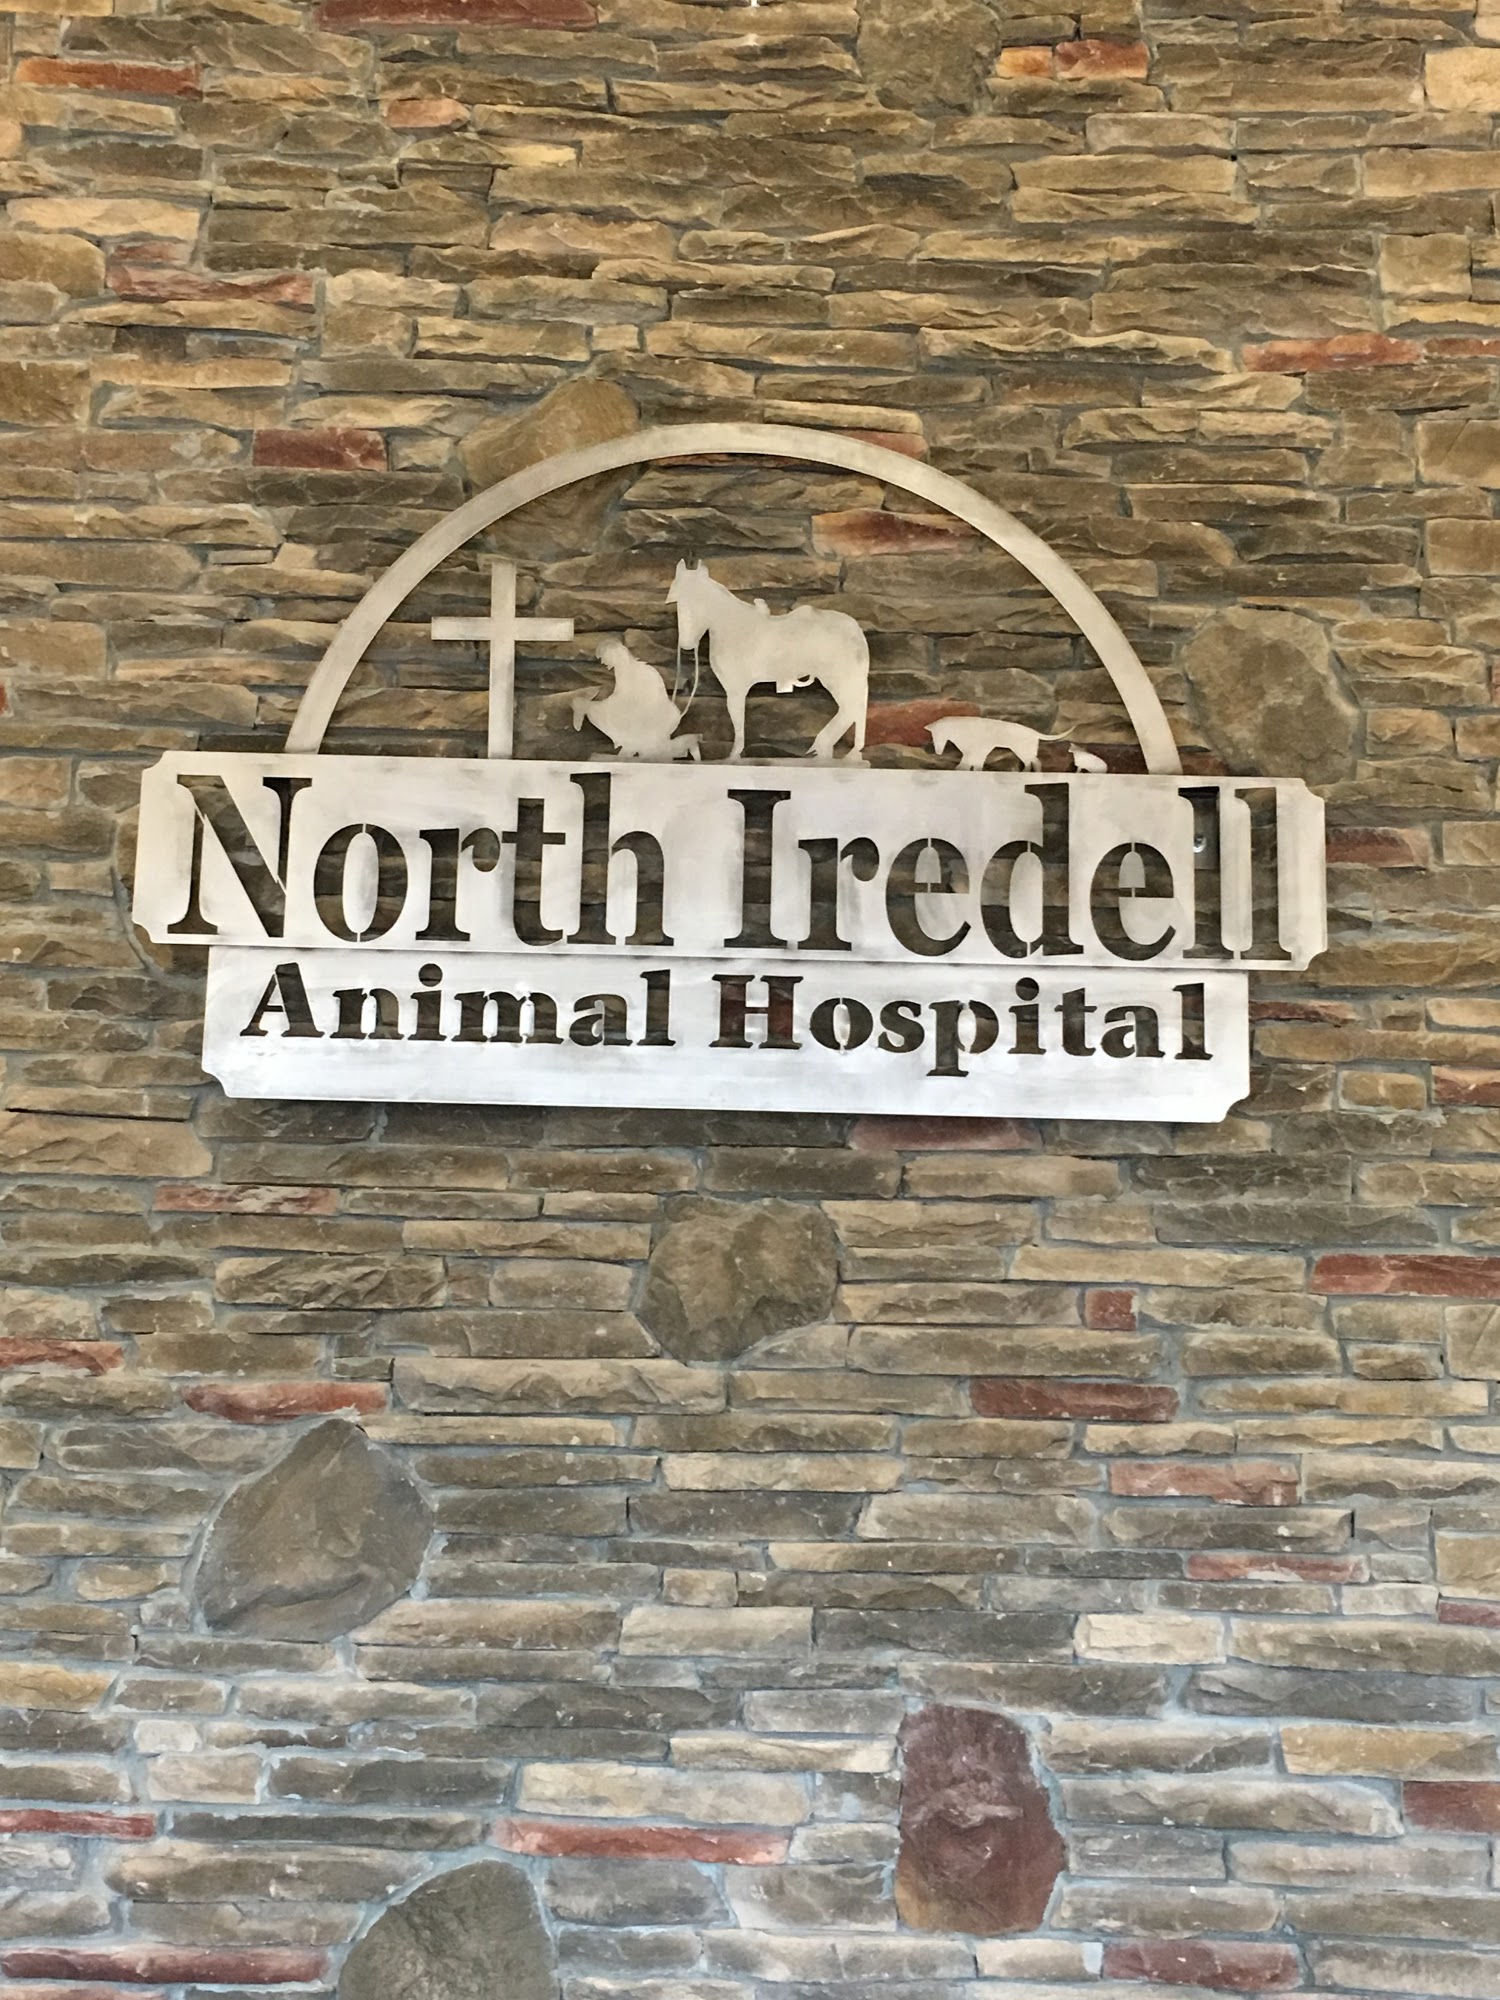 North Iredell Animal Hospital